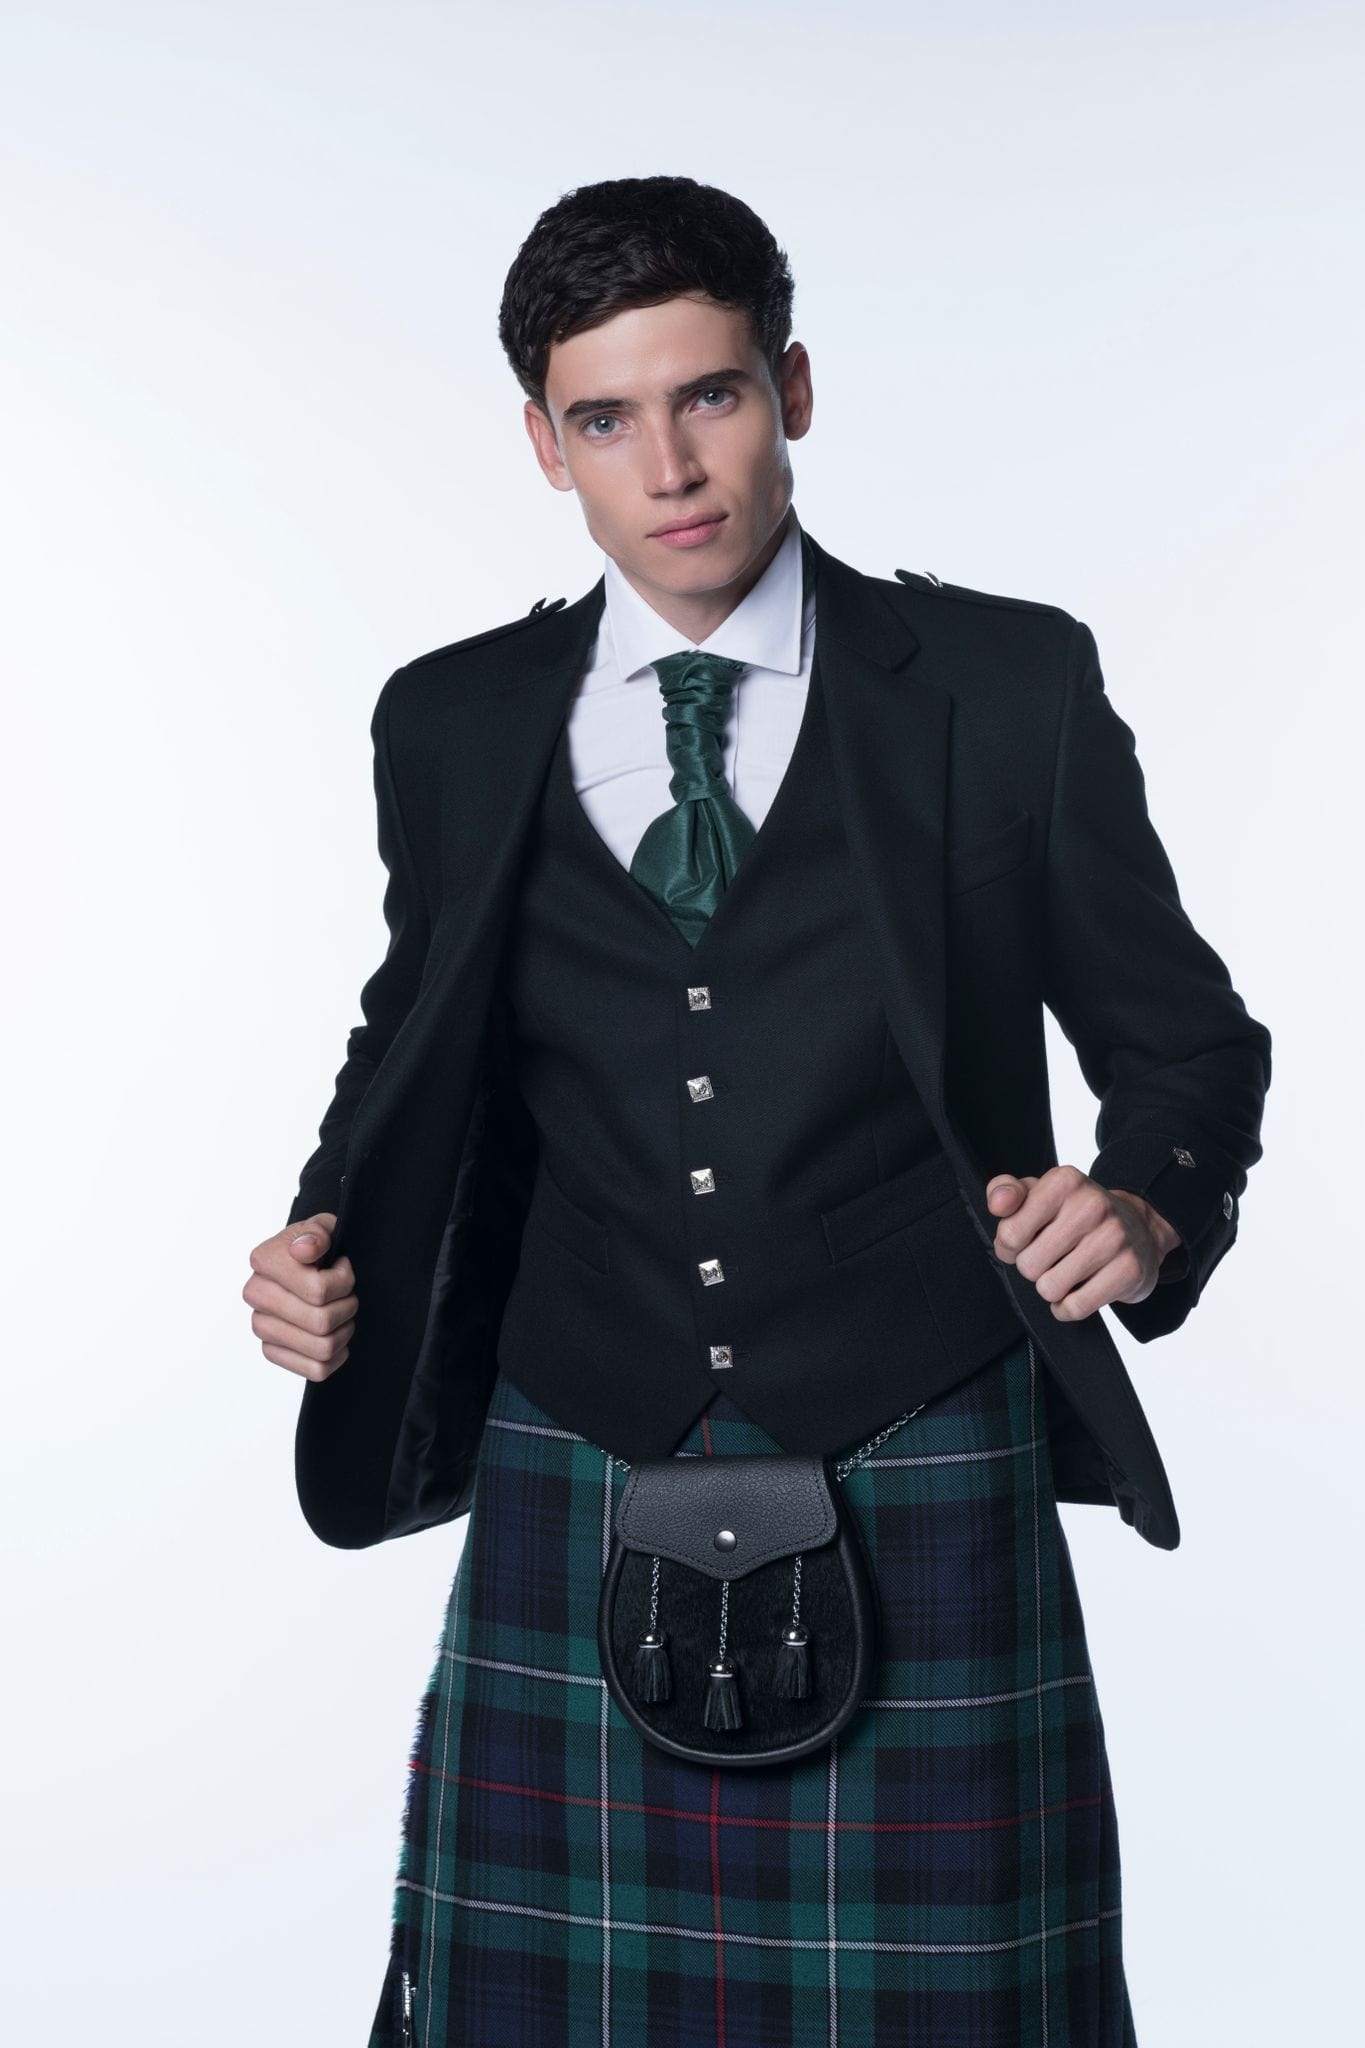 Argyll Kilt Jacket and 5 Button Waistcoat - MacGregor and MacDuff